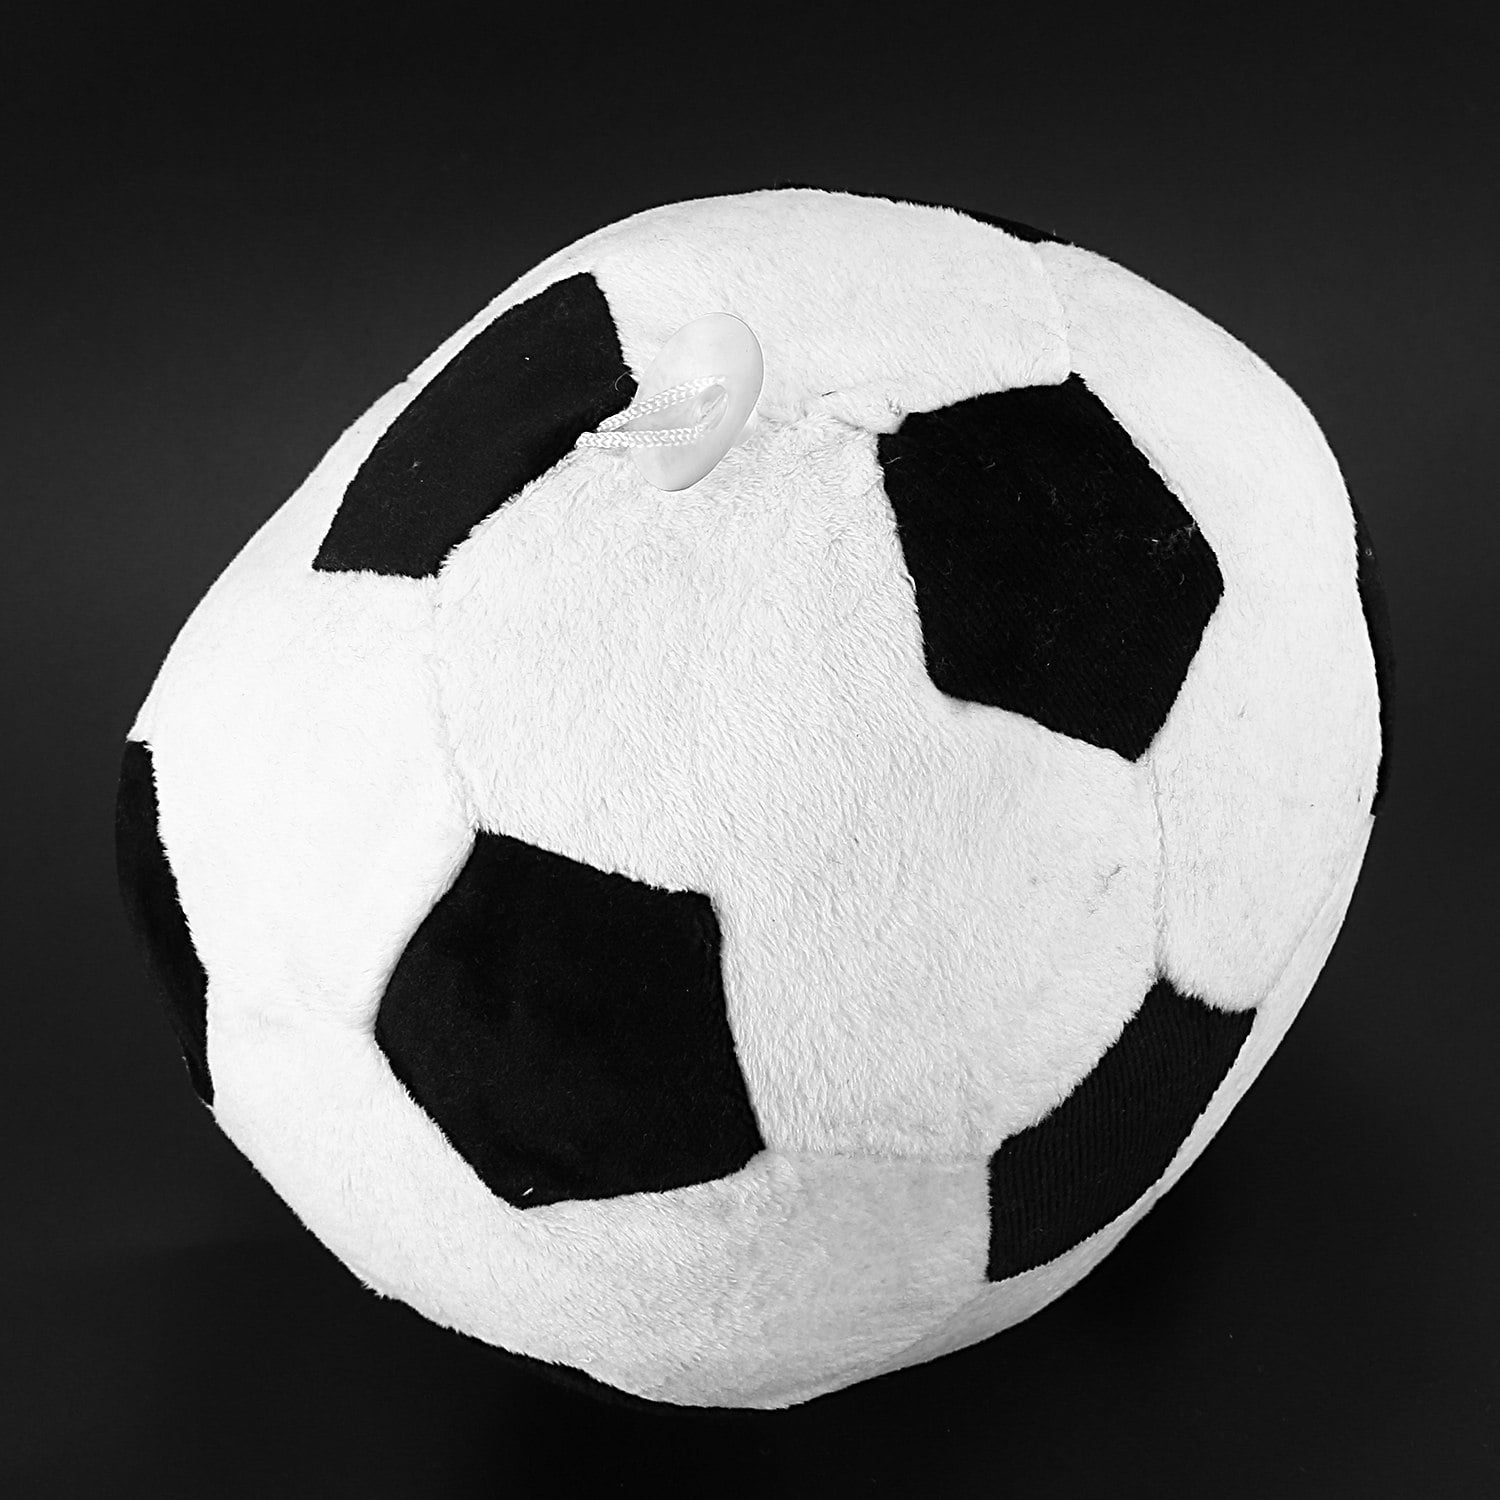 Soccer Ball Pillow Stuffed Fluffy Plush Baby Soccer Ball Soft Durable Soccer Sports Toy Gift For Kids Black 8 L X 8 W X 8 H 